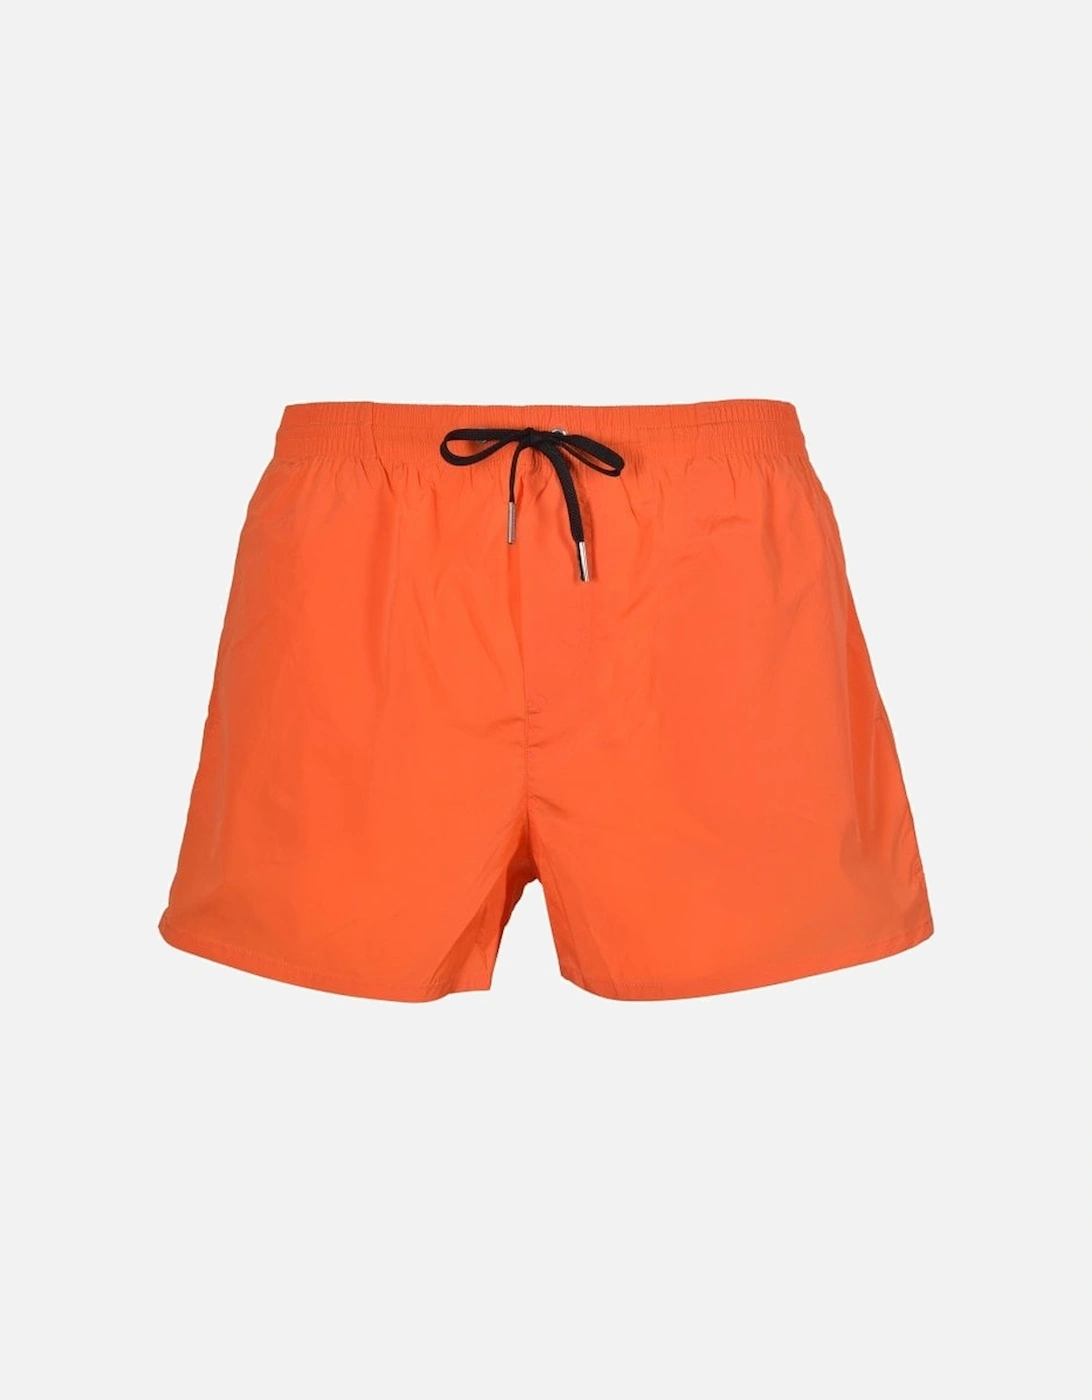 ICON Swim Shorts, Orange/black